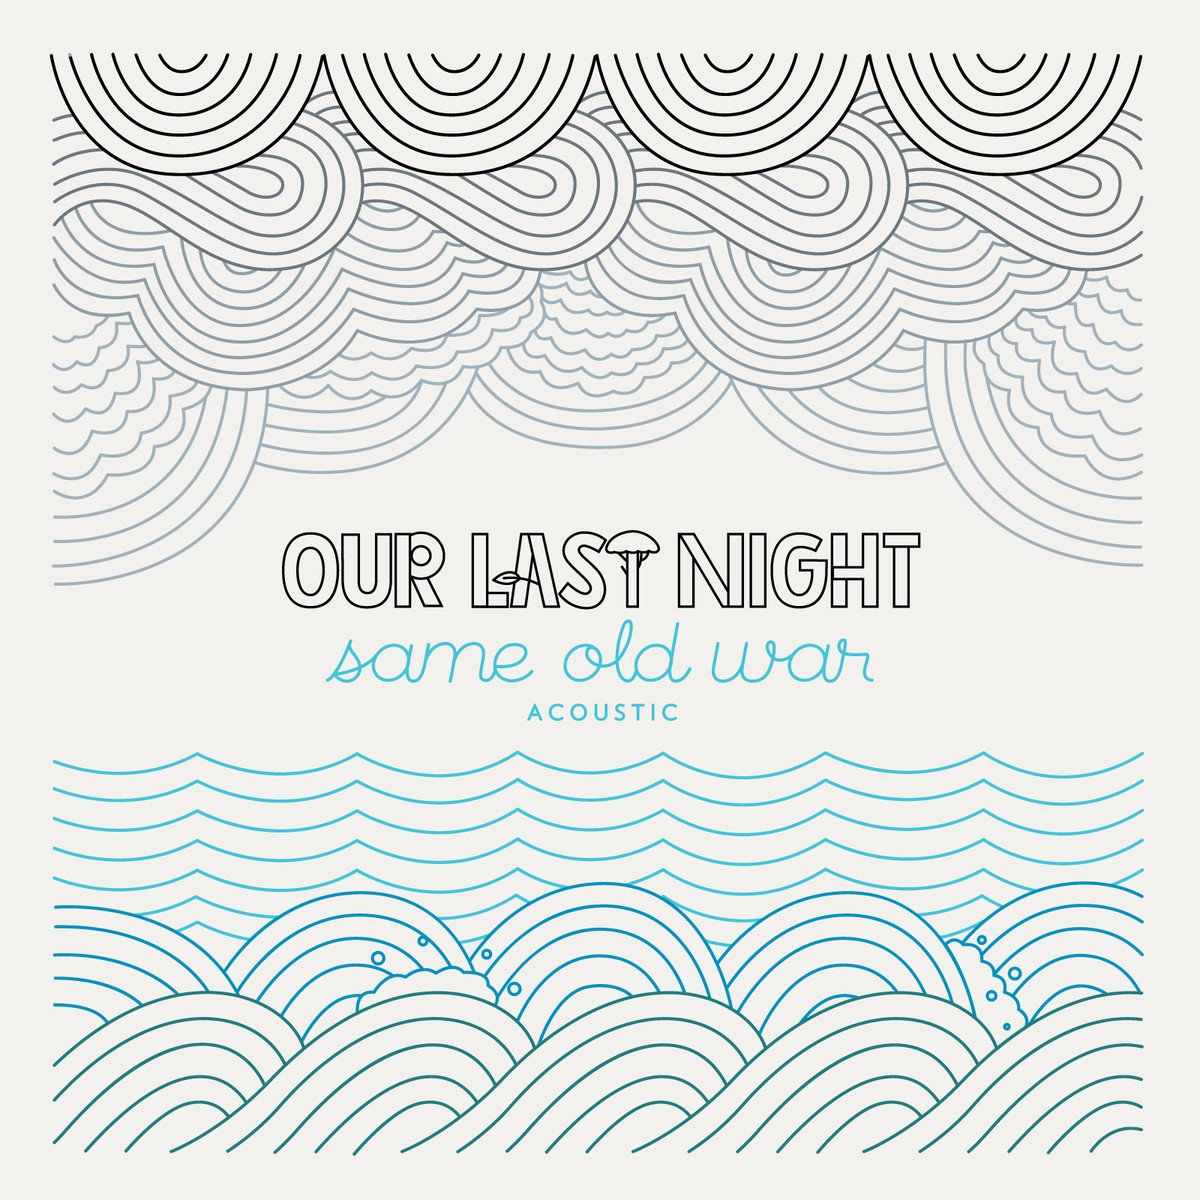 Did you well last night. Our last Night обложка. Our last Night альбомы. Our last Night Oak Island.